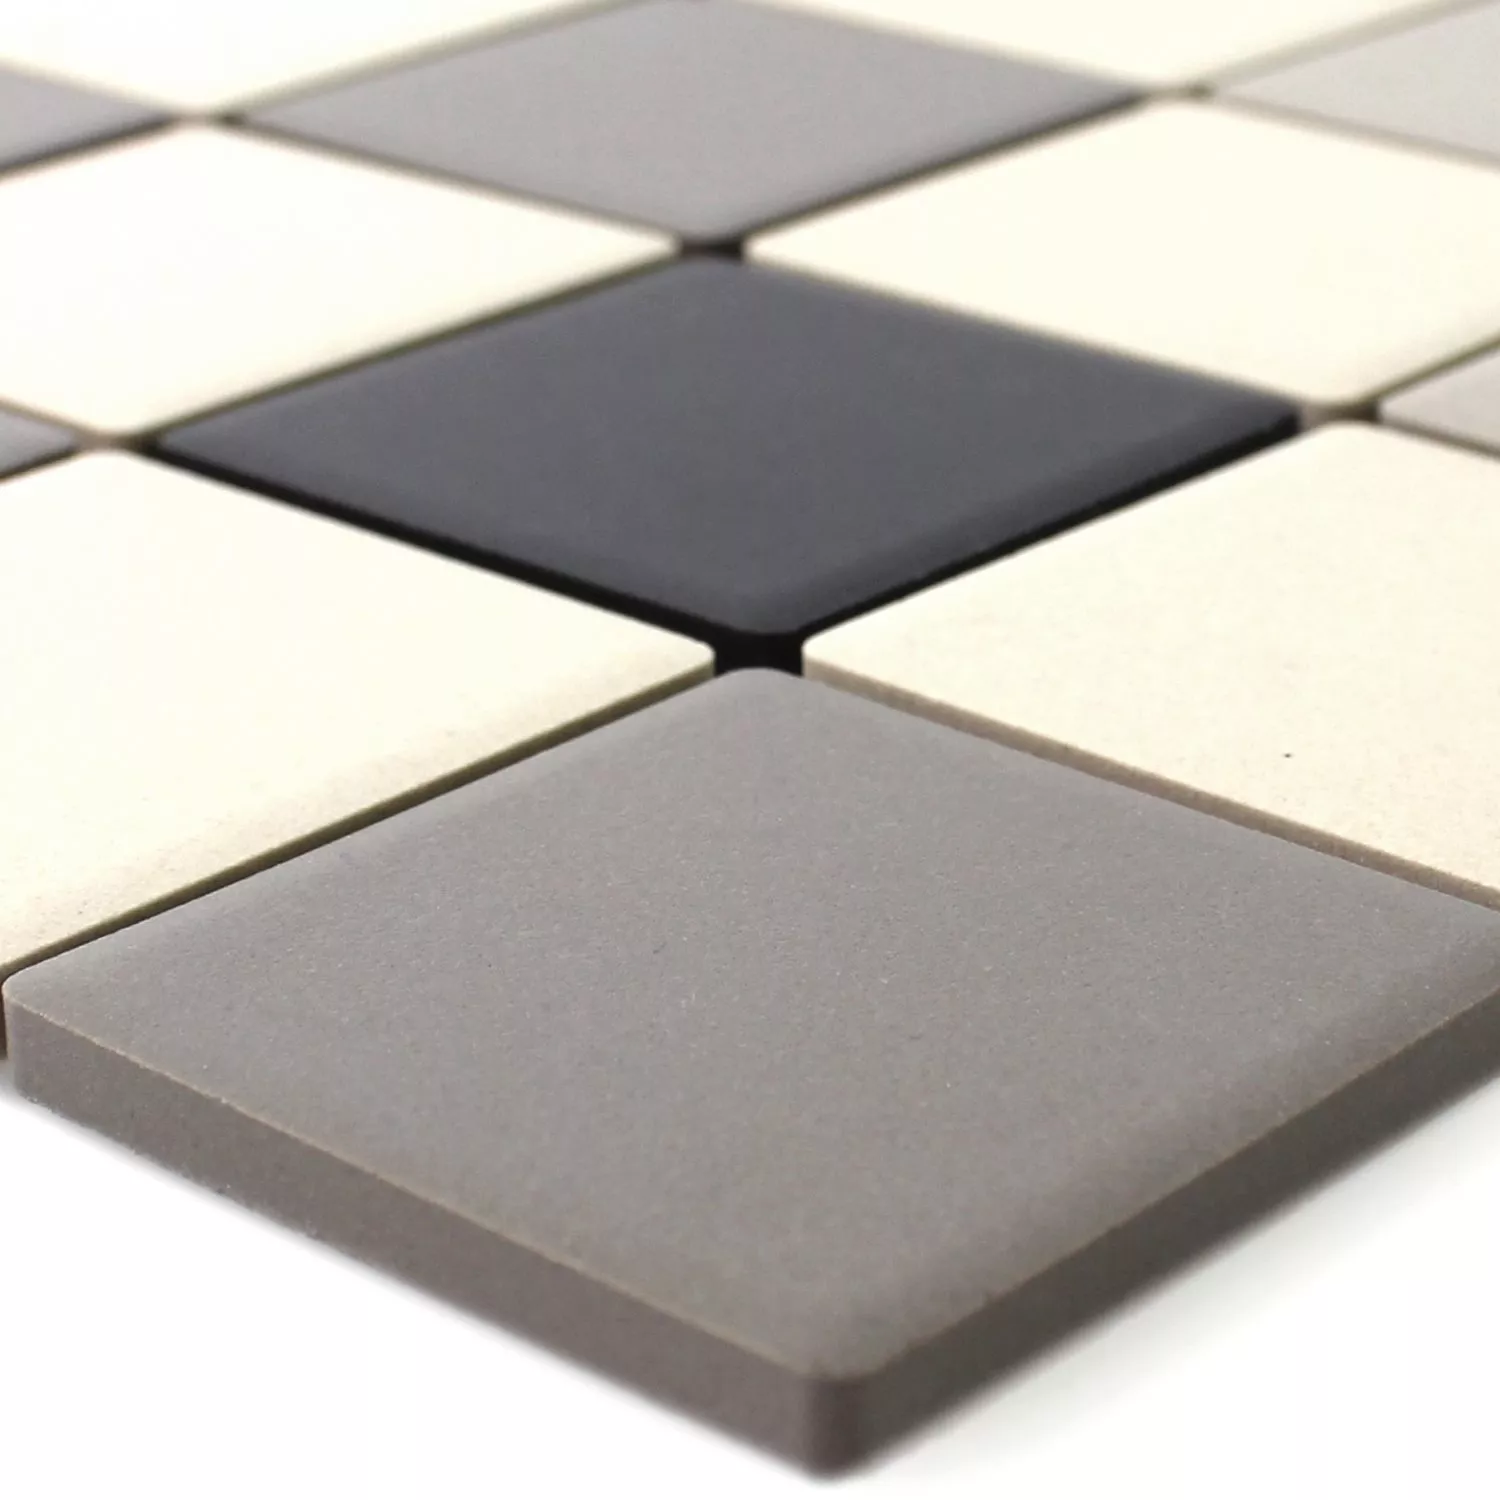 Mosaic Tiles Ceramic Grey Beige Non-Slip Unglazed